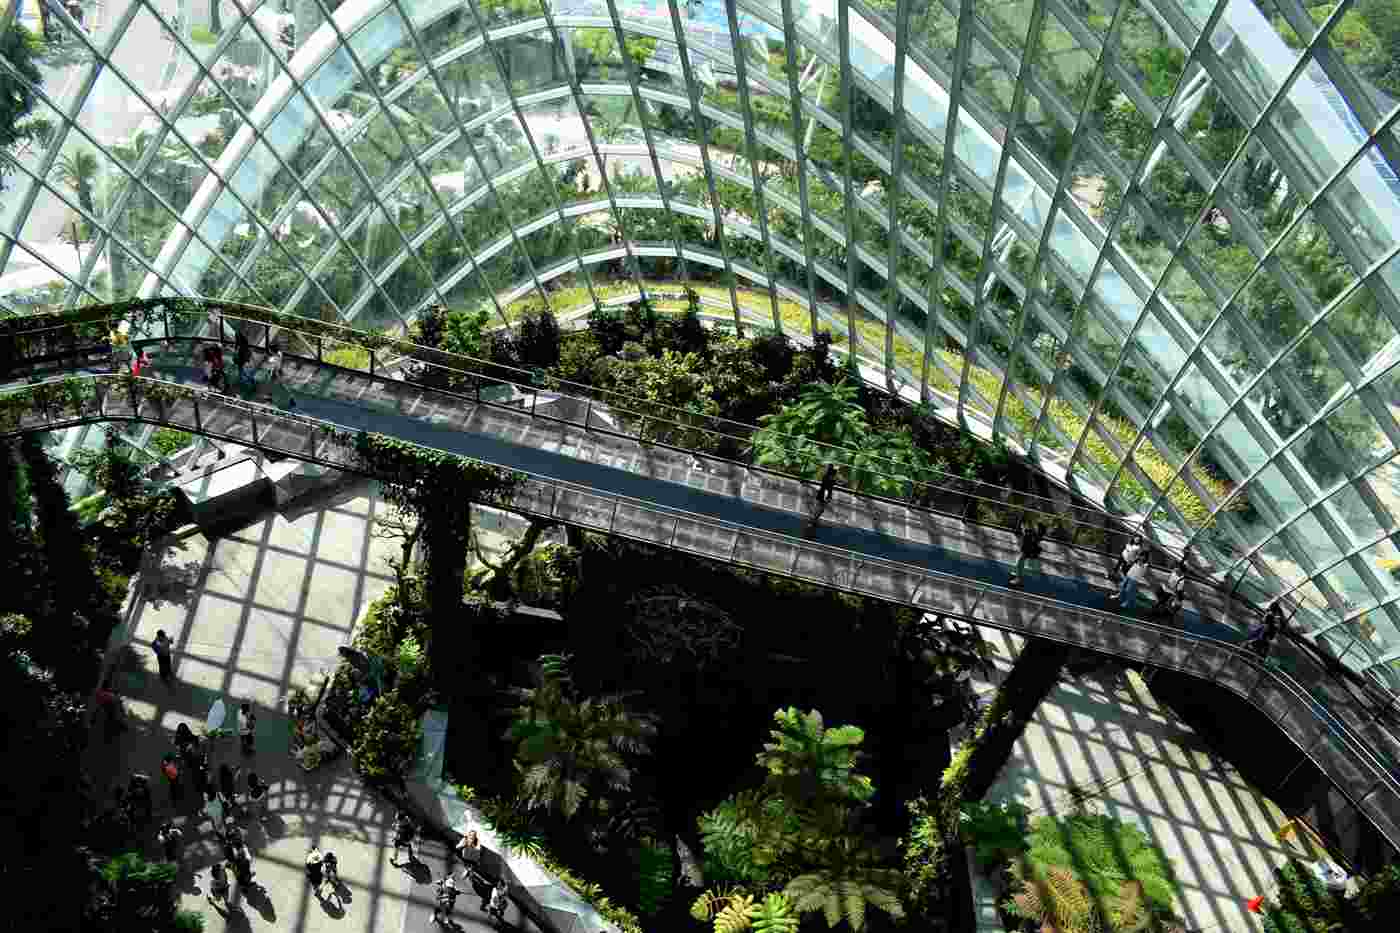 Giant greenhouse